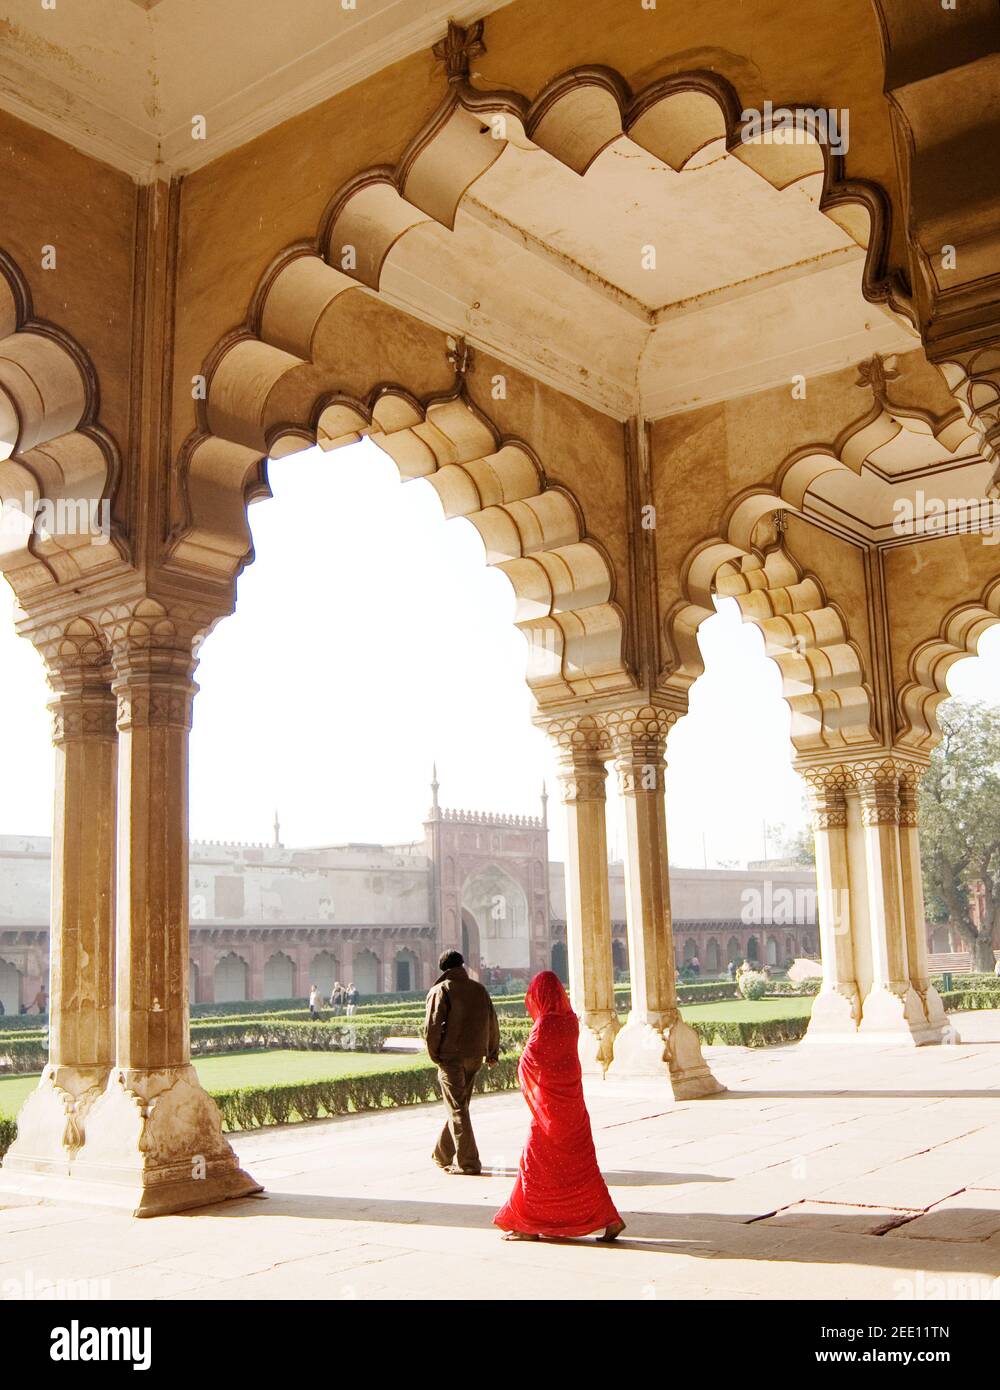 Homme et femme marchant dans le fort d'Agra, Agra, Inde Banque D'Images